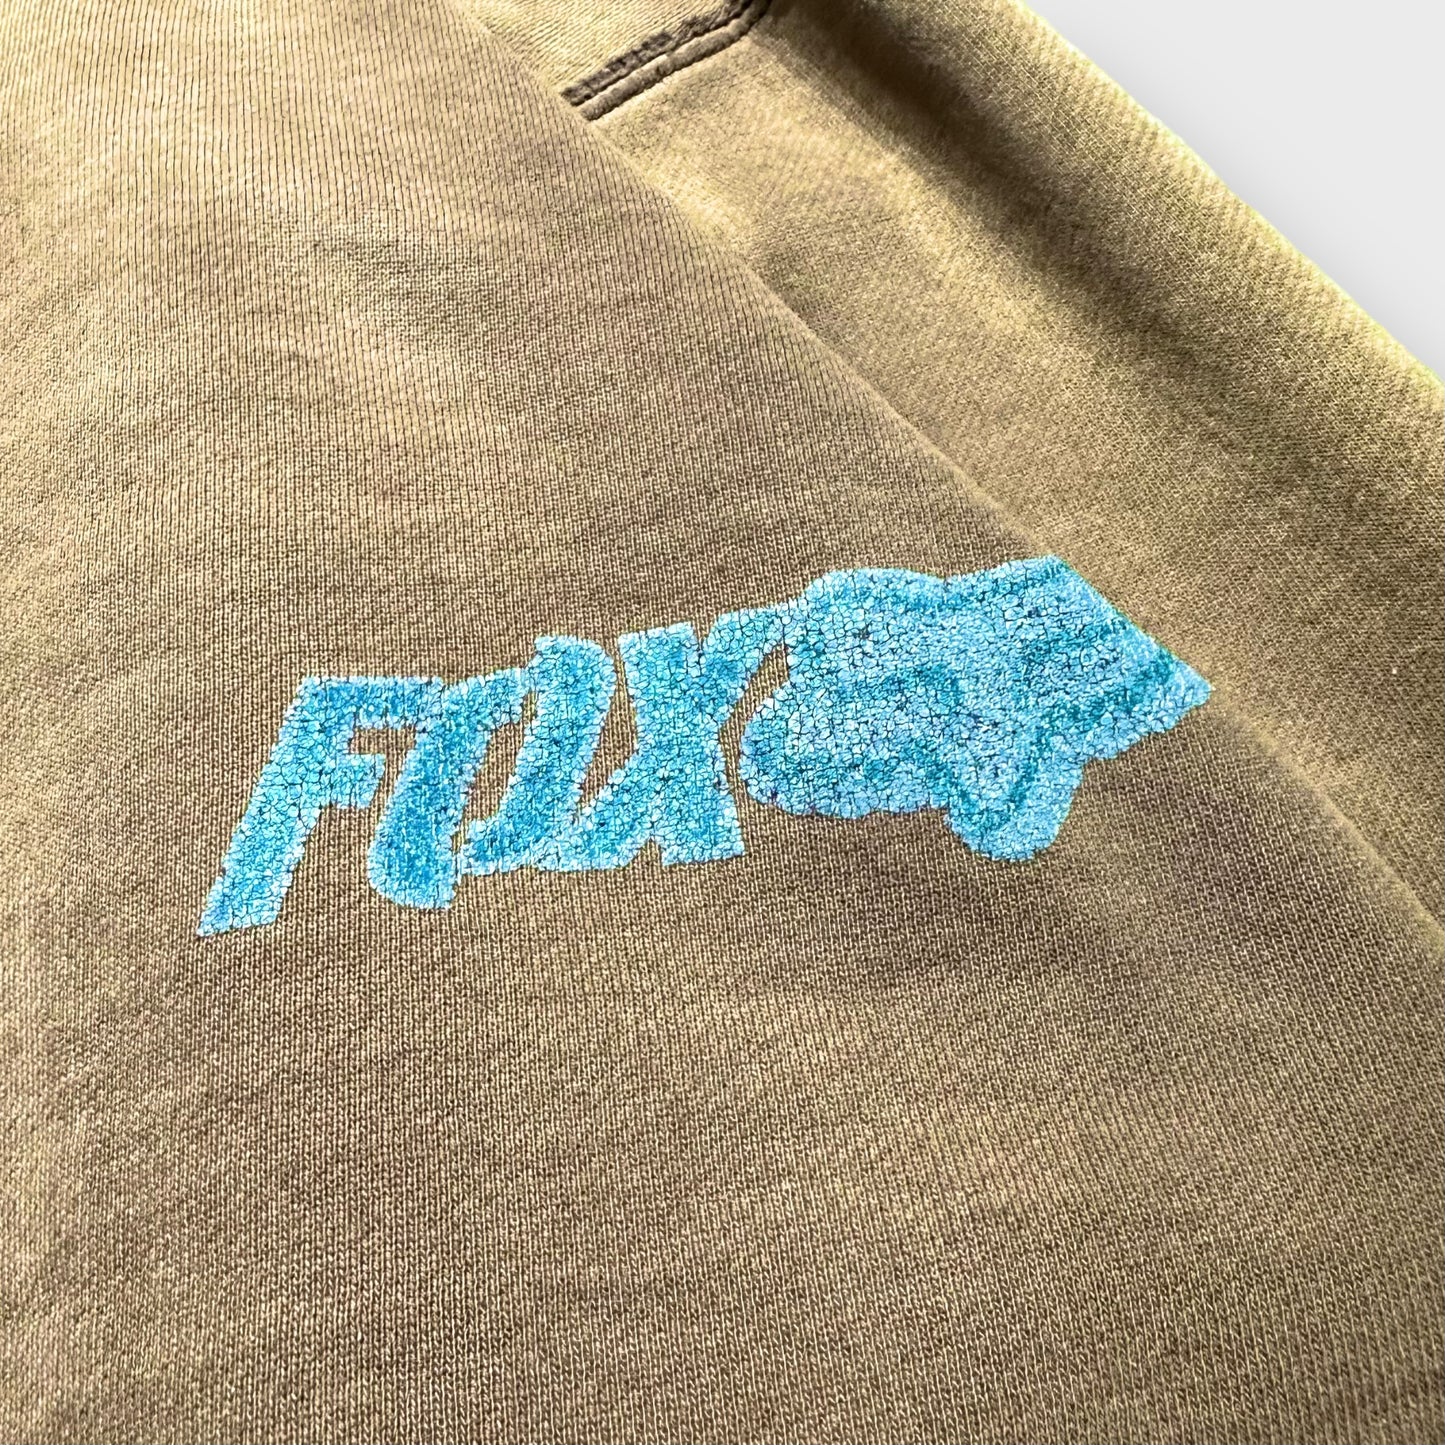 "FOX RACING" Damaged hoodie